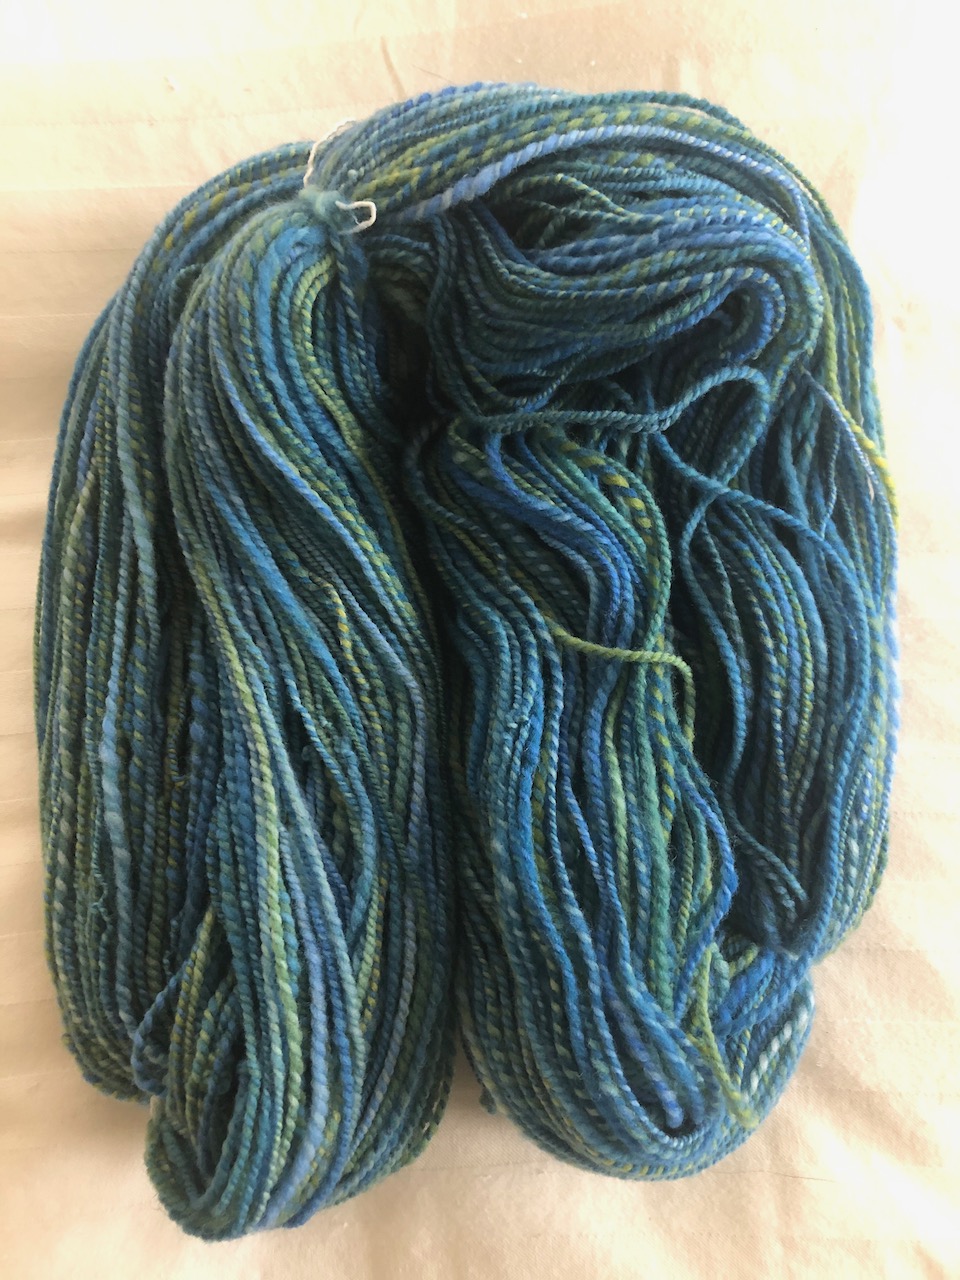 Spun yarn (Merino and/or Columbia, hand-dyed)